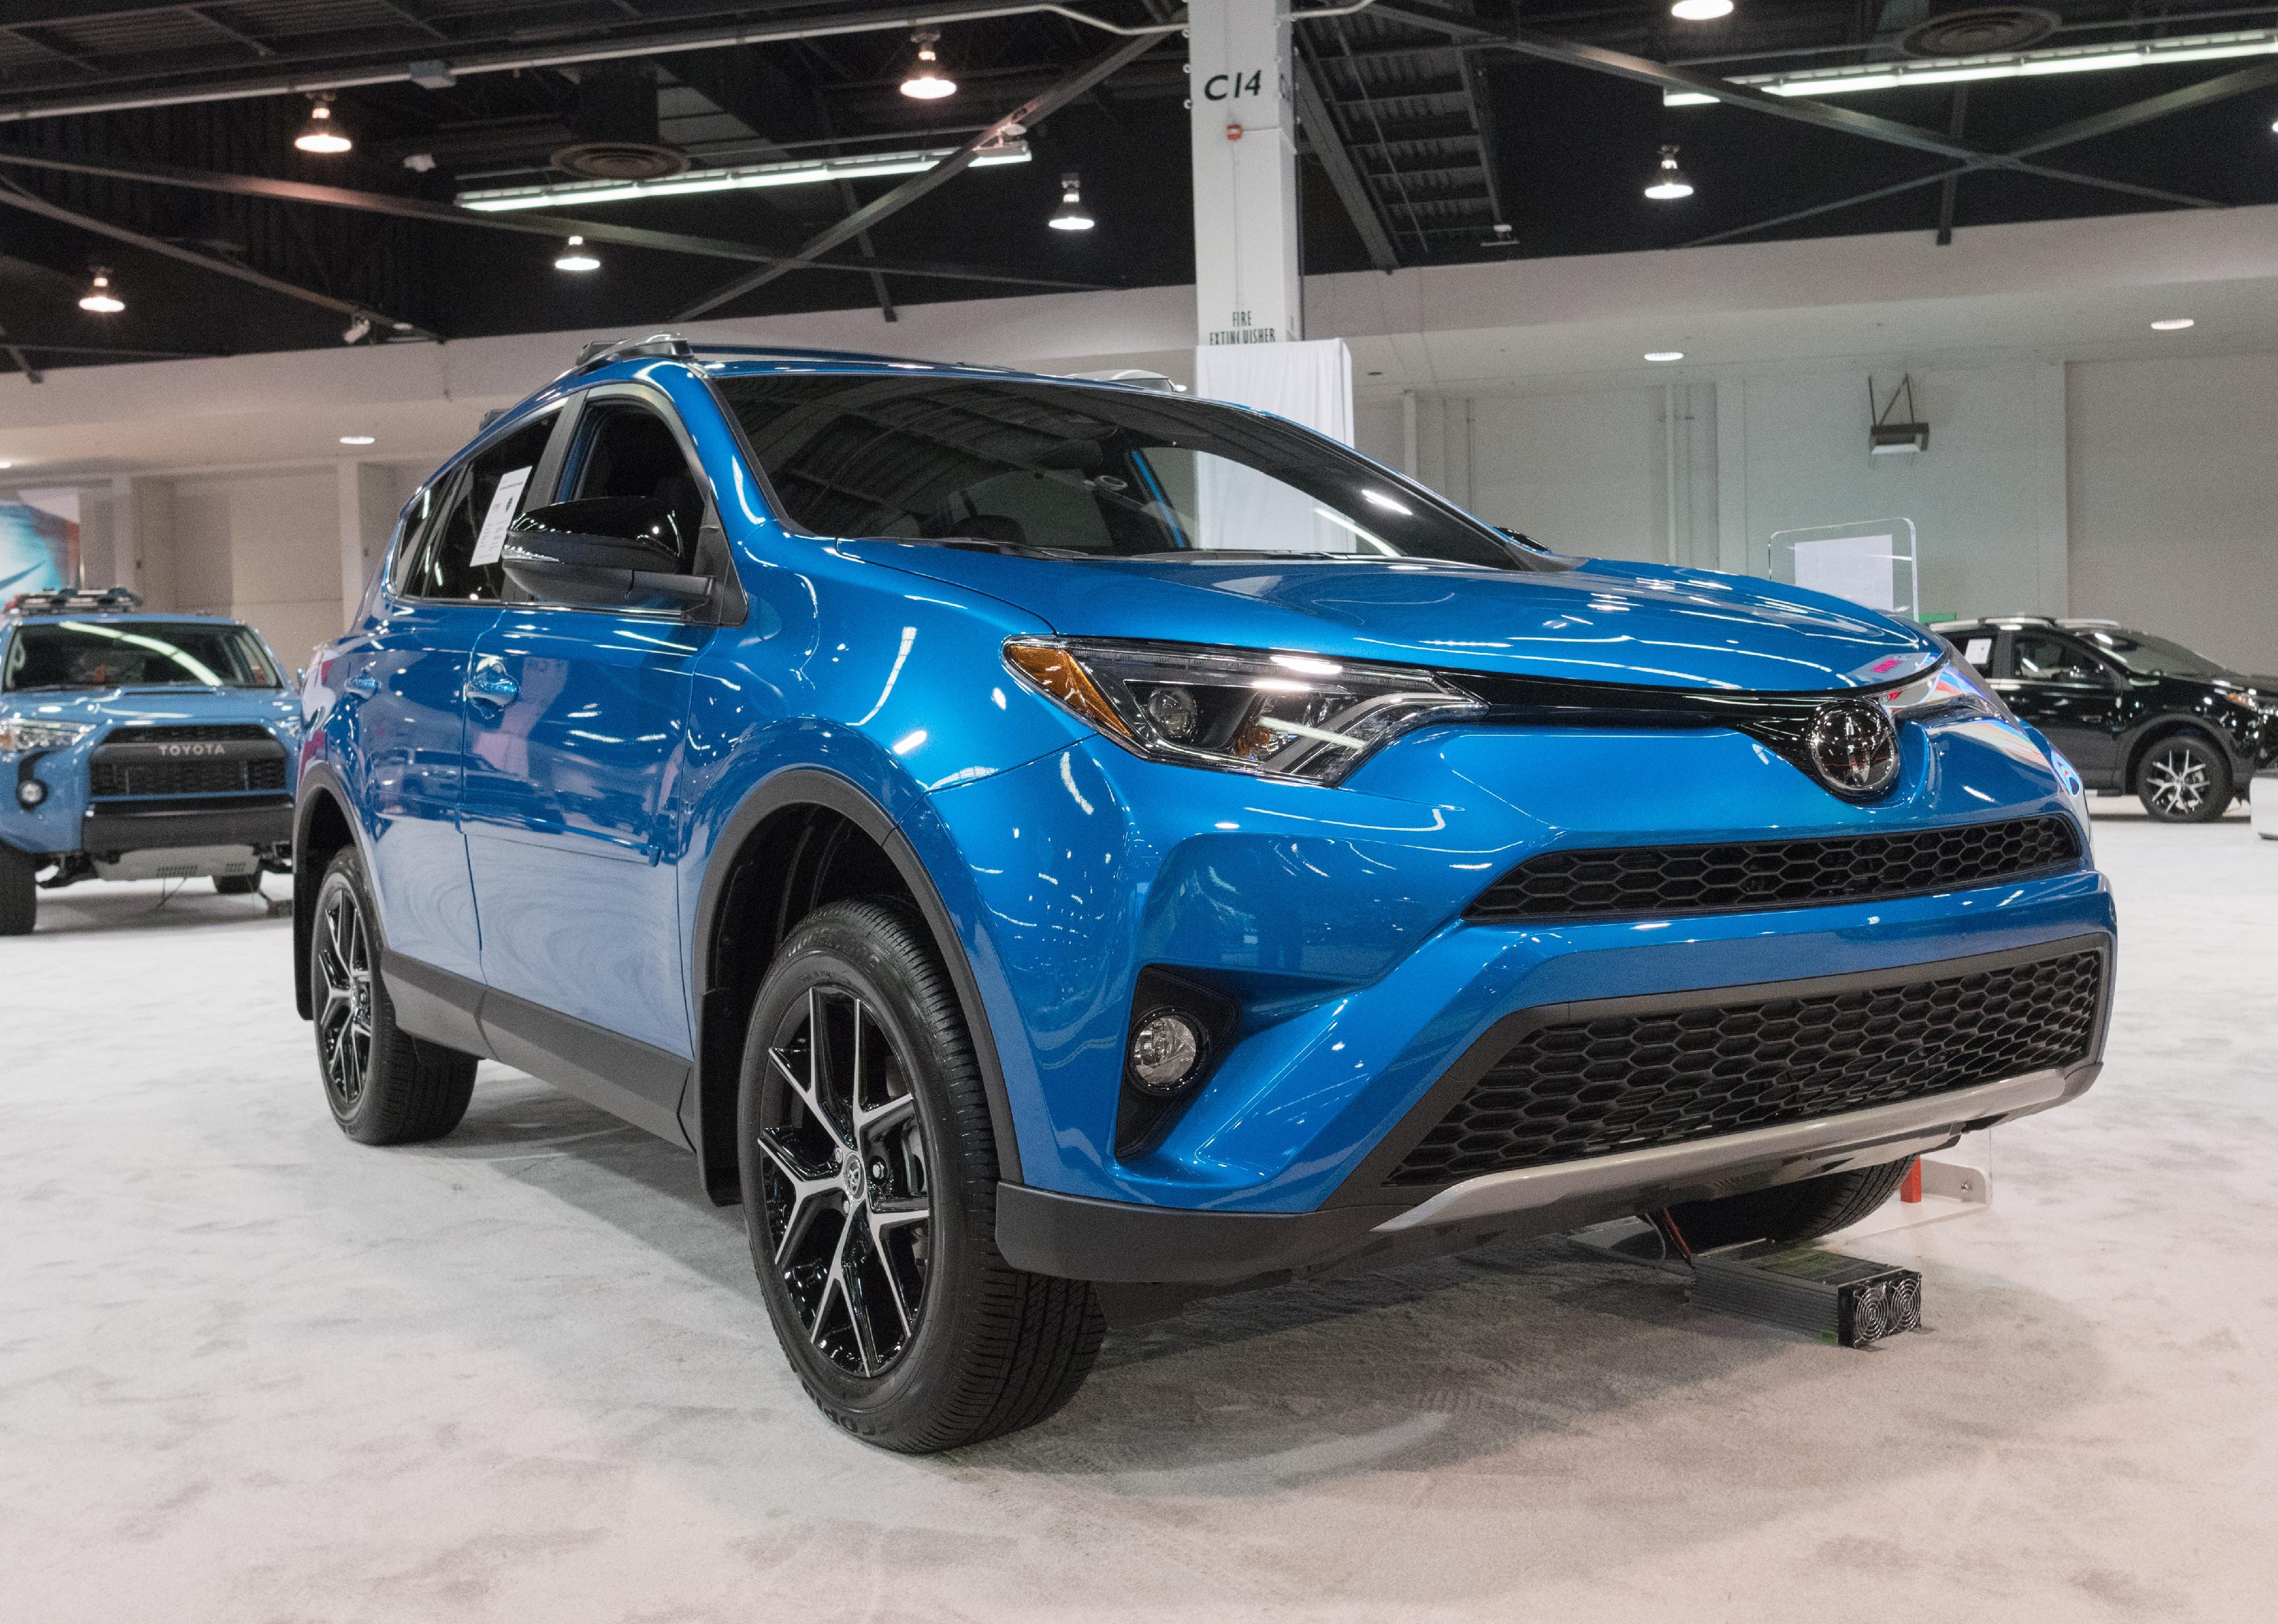 Blue Toyota RAV4 on display at the Orange County International Auto Show.